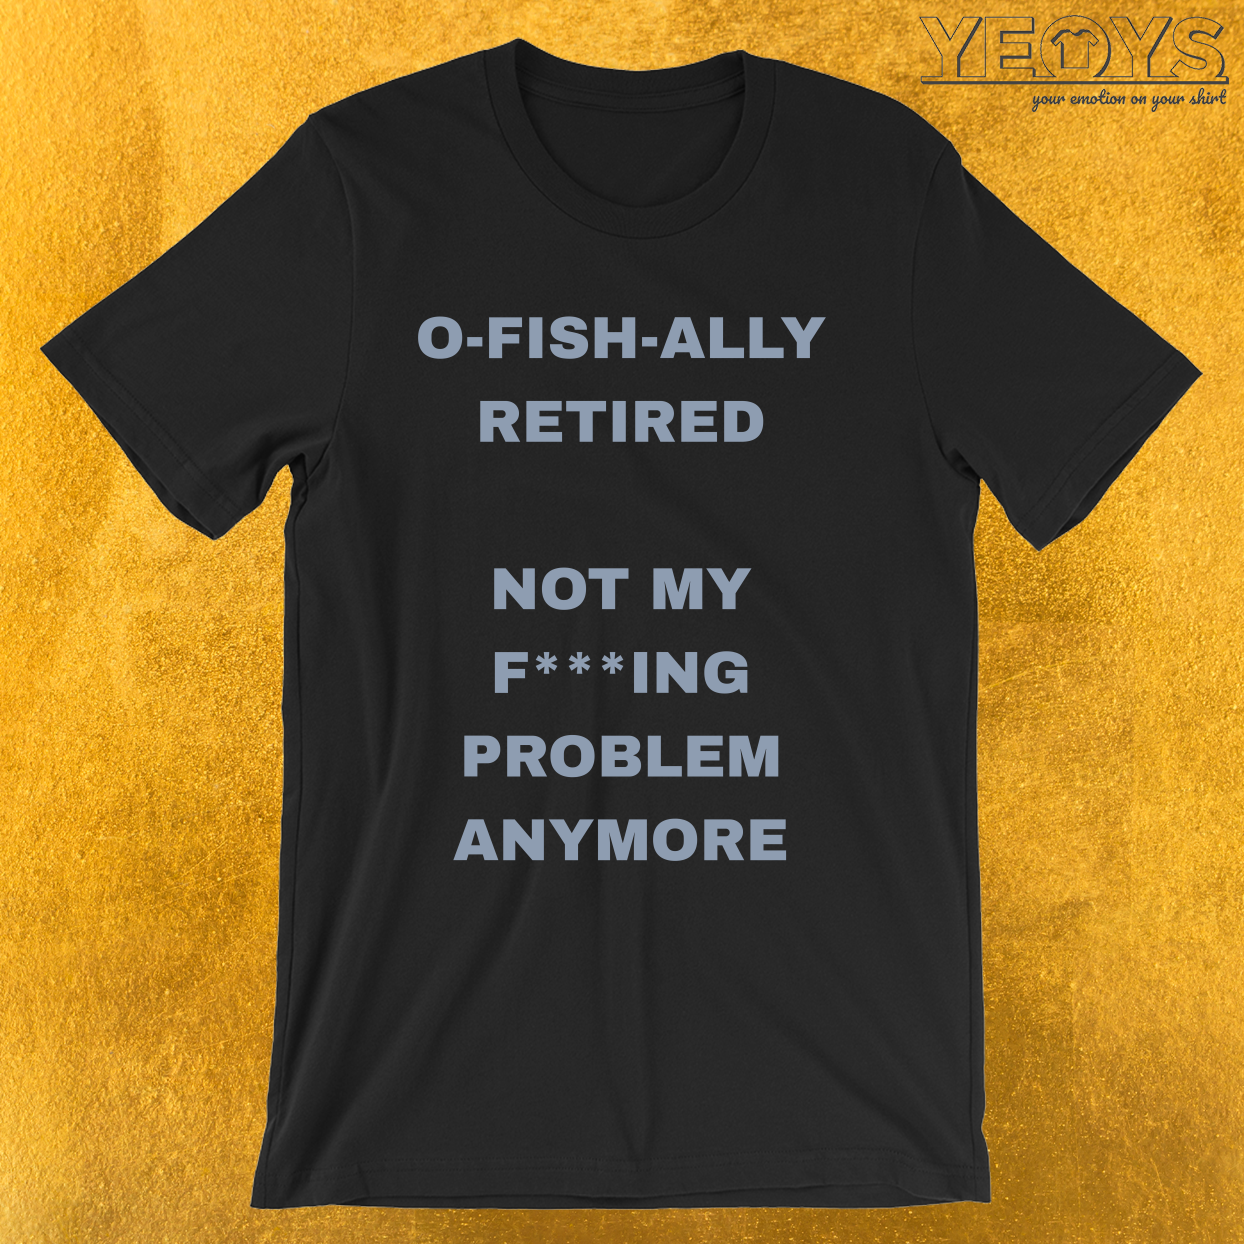 O-Fish-Ally Retired – Old Fisherman Tee